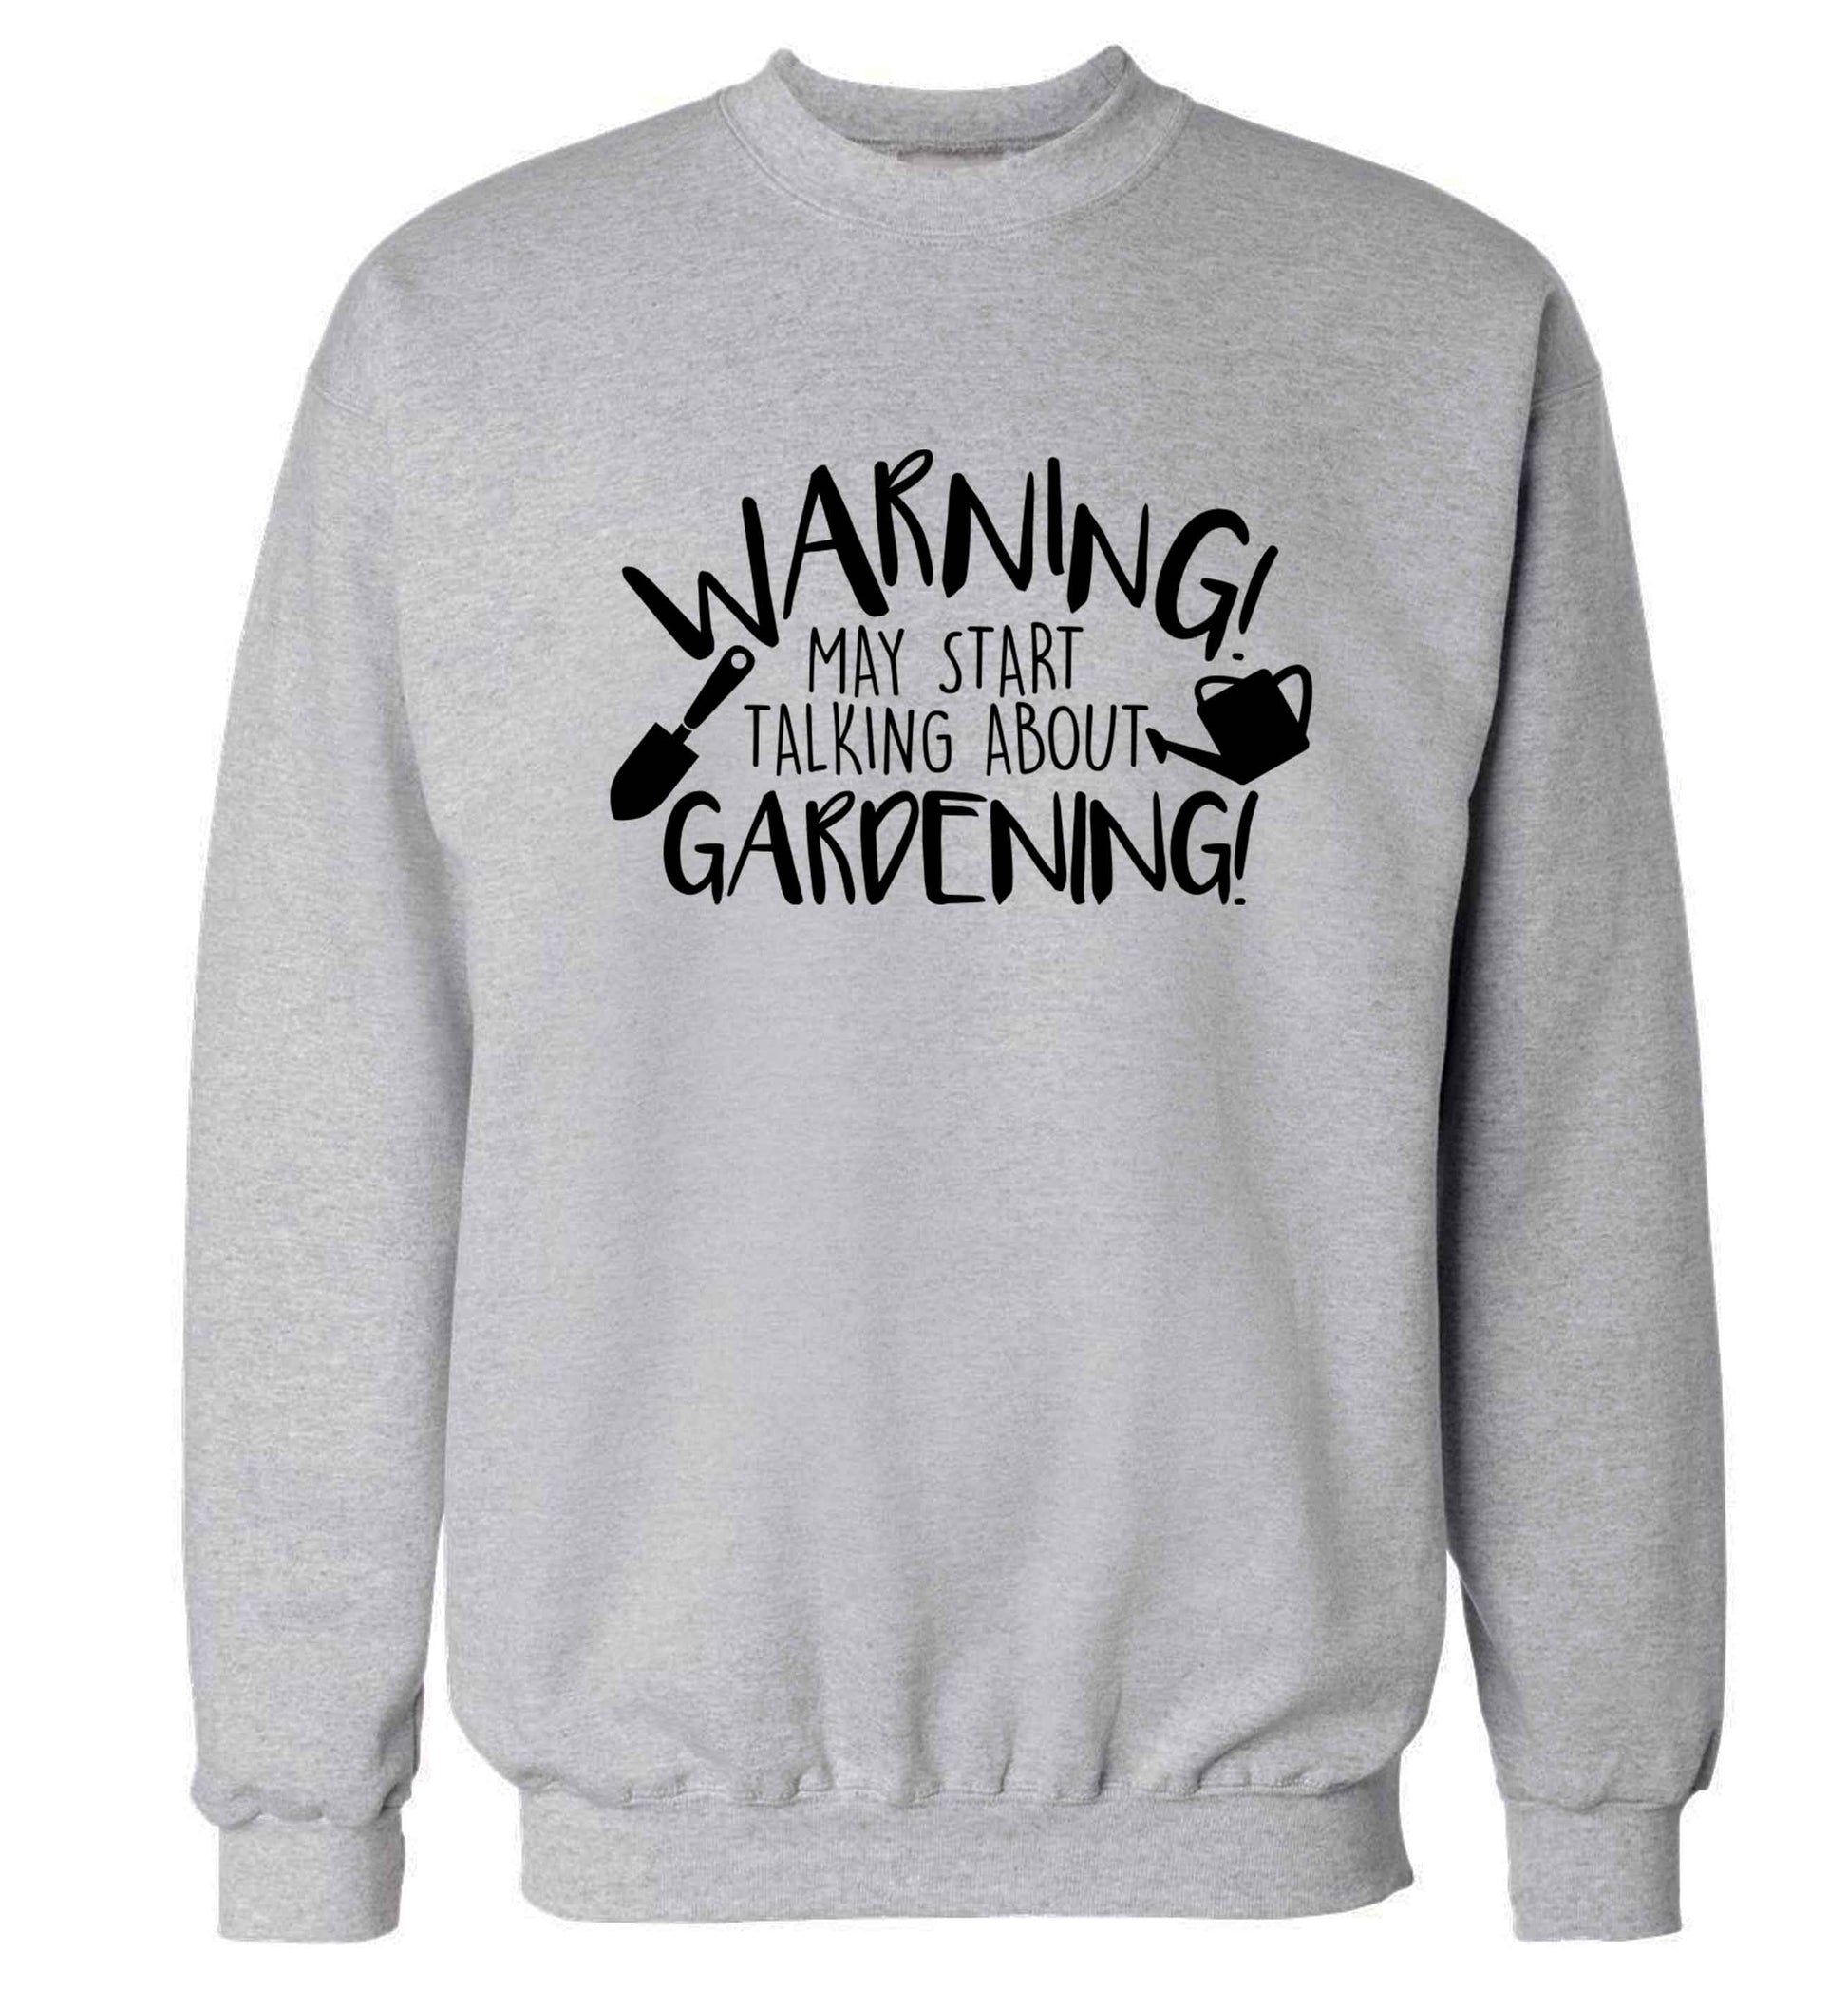 Warning may start talking about gardening Adult's unisex grey Sweater 2XL